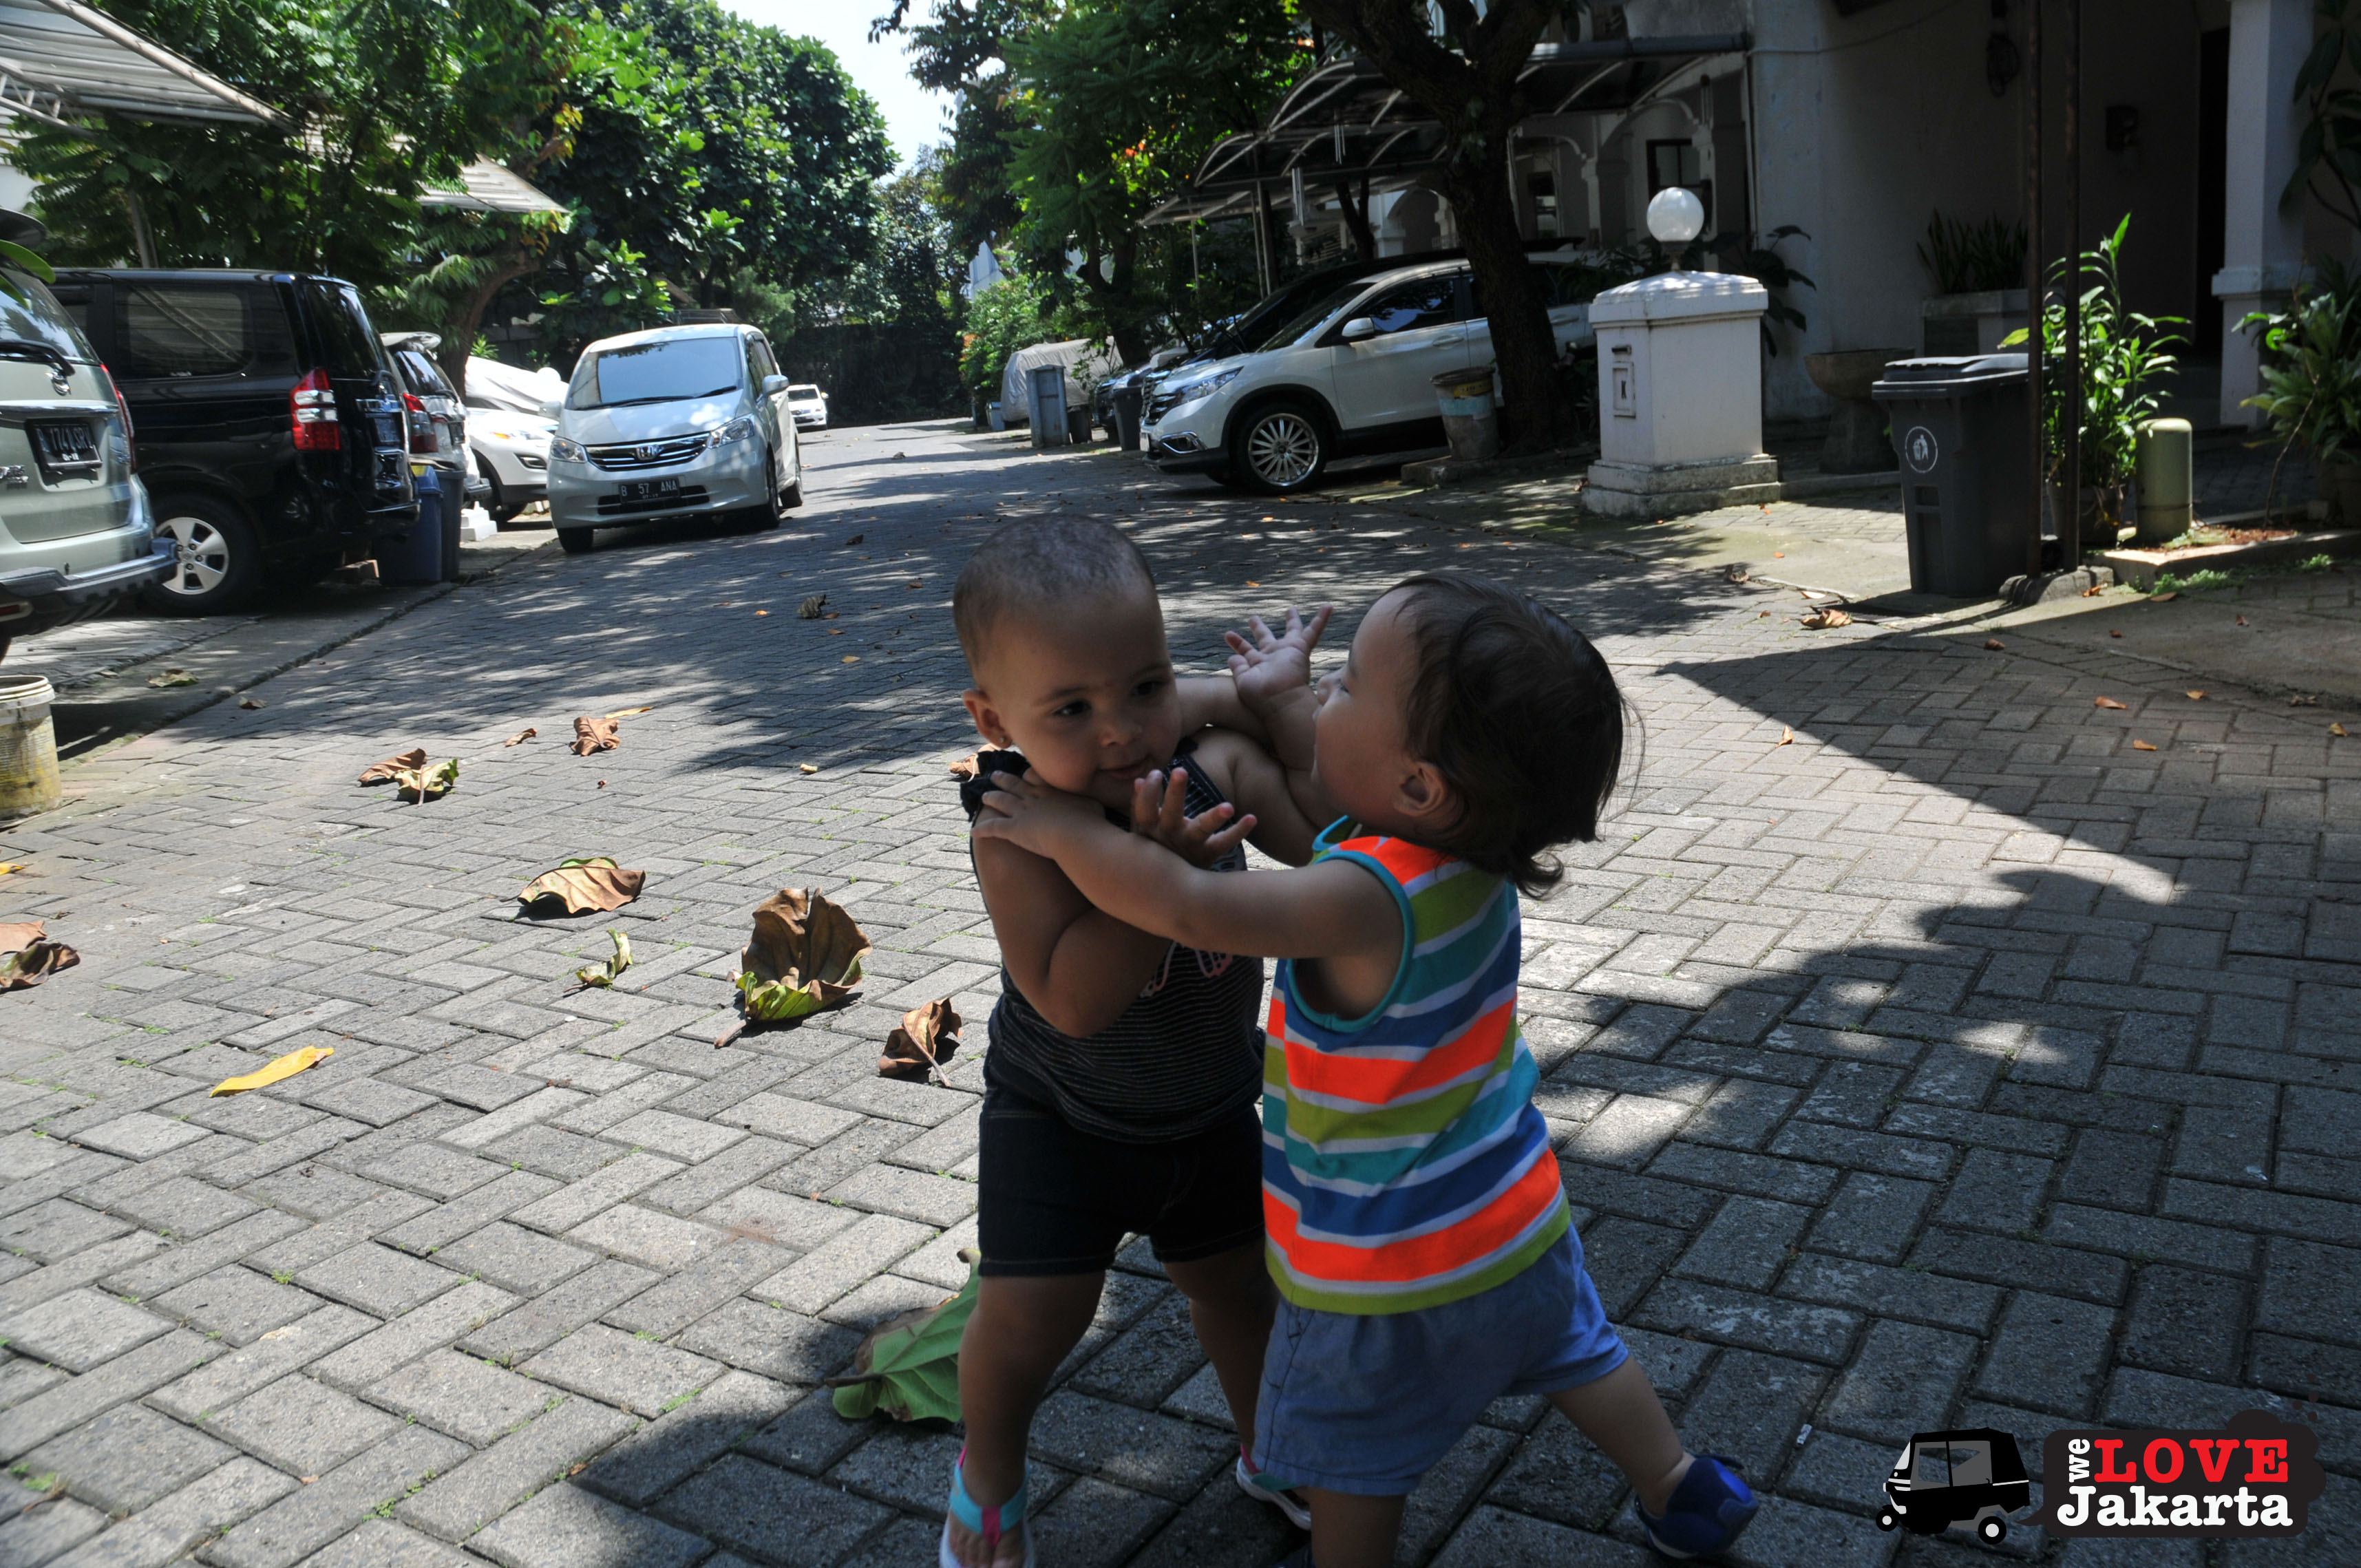 tasha may_we love jakarta_welovejakarta_kids in jakarta_kids playdate jakarta_kids playiing in Jakarta